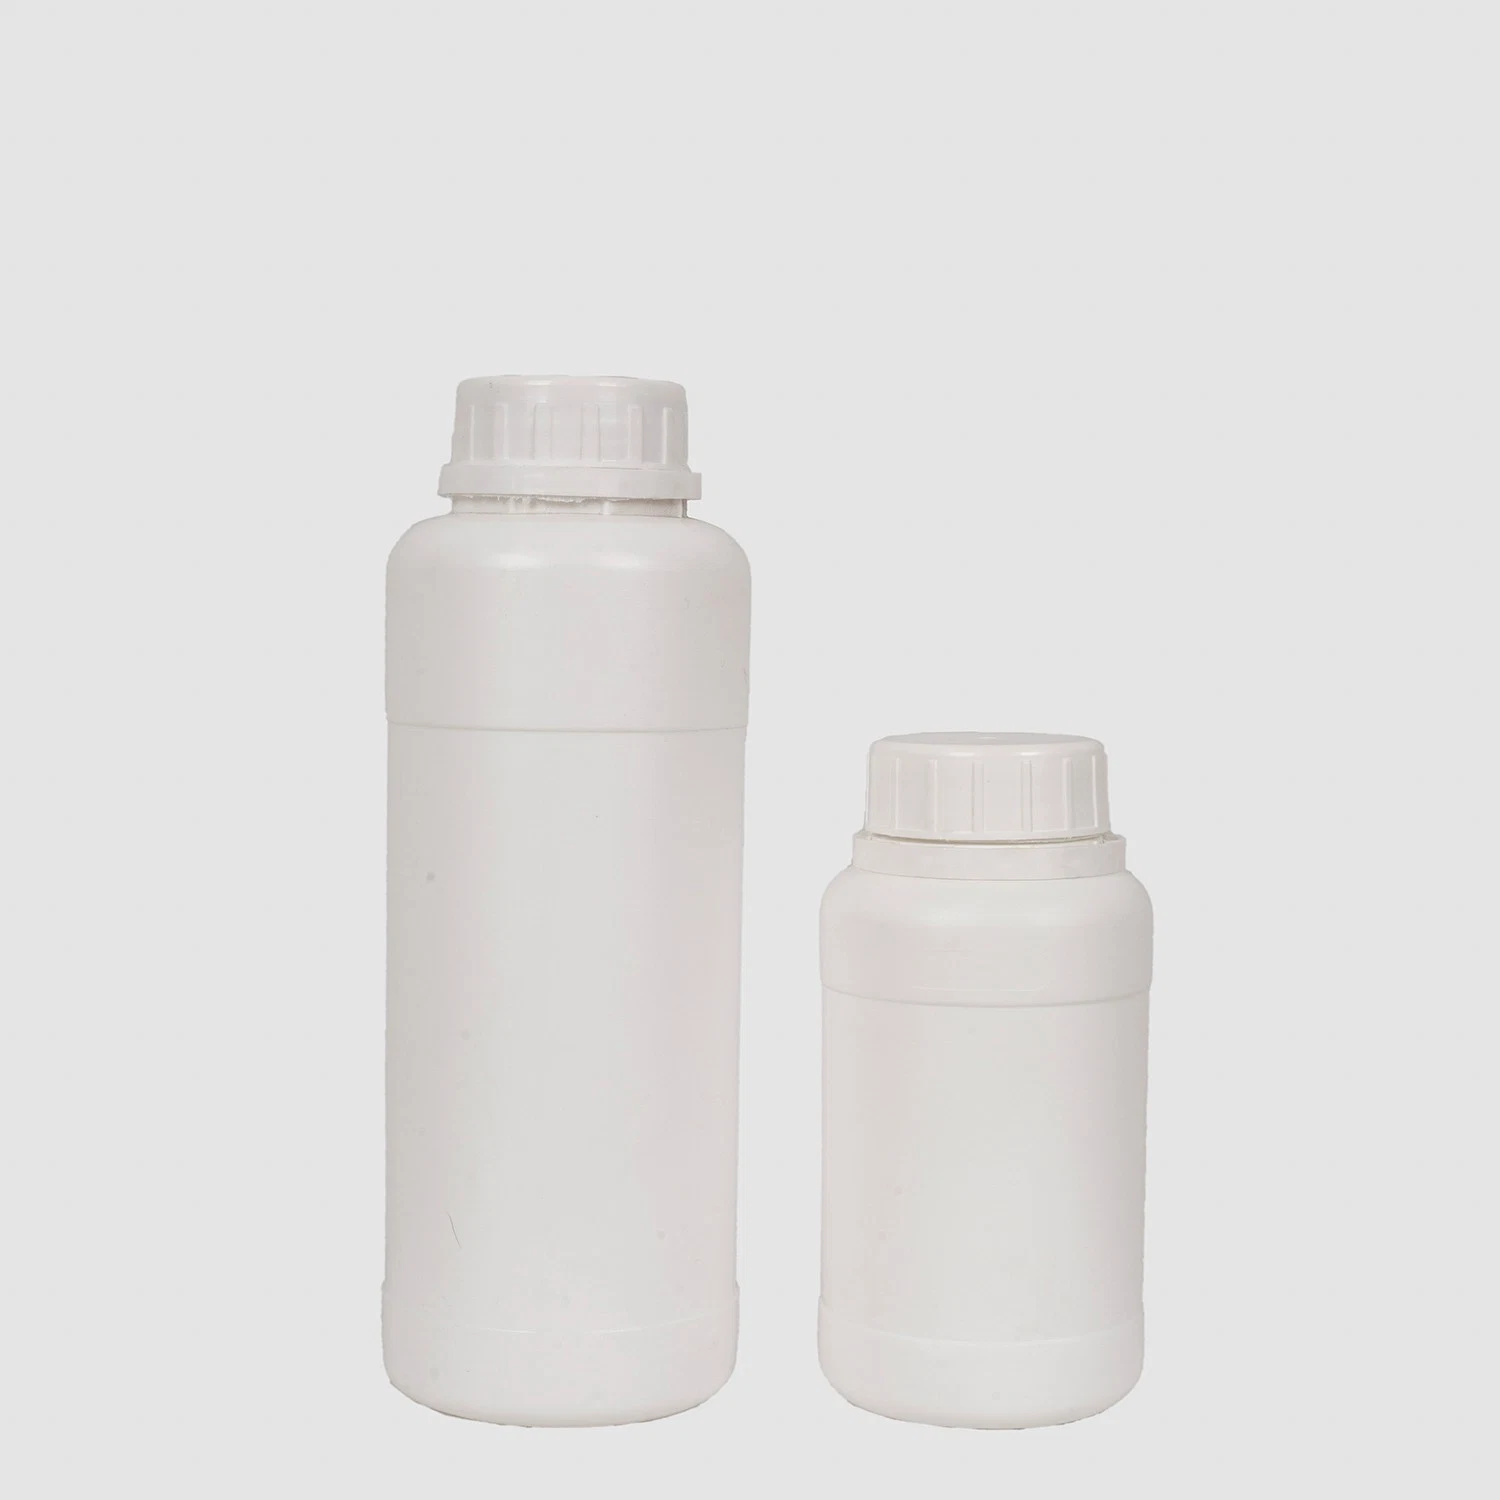 Industrial Grade DBP Manufacturer PVC Chemicals Plasticizer Dibutyl Phthalate CAS No. 84-74-2